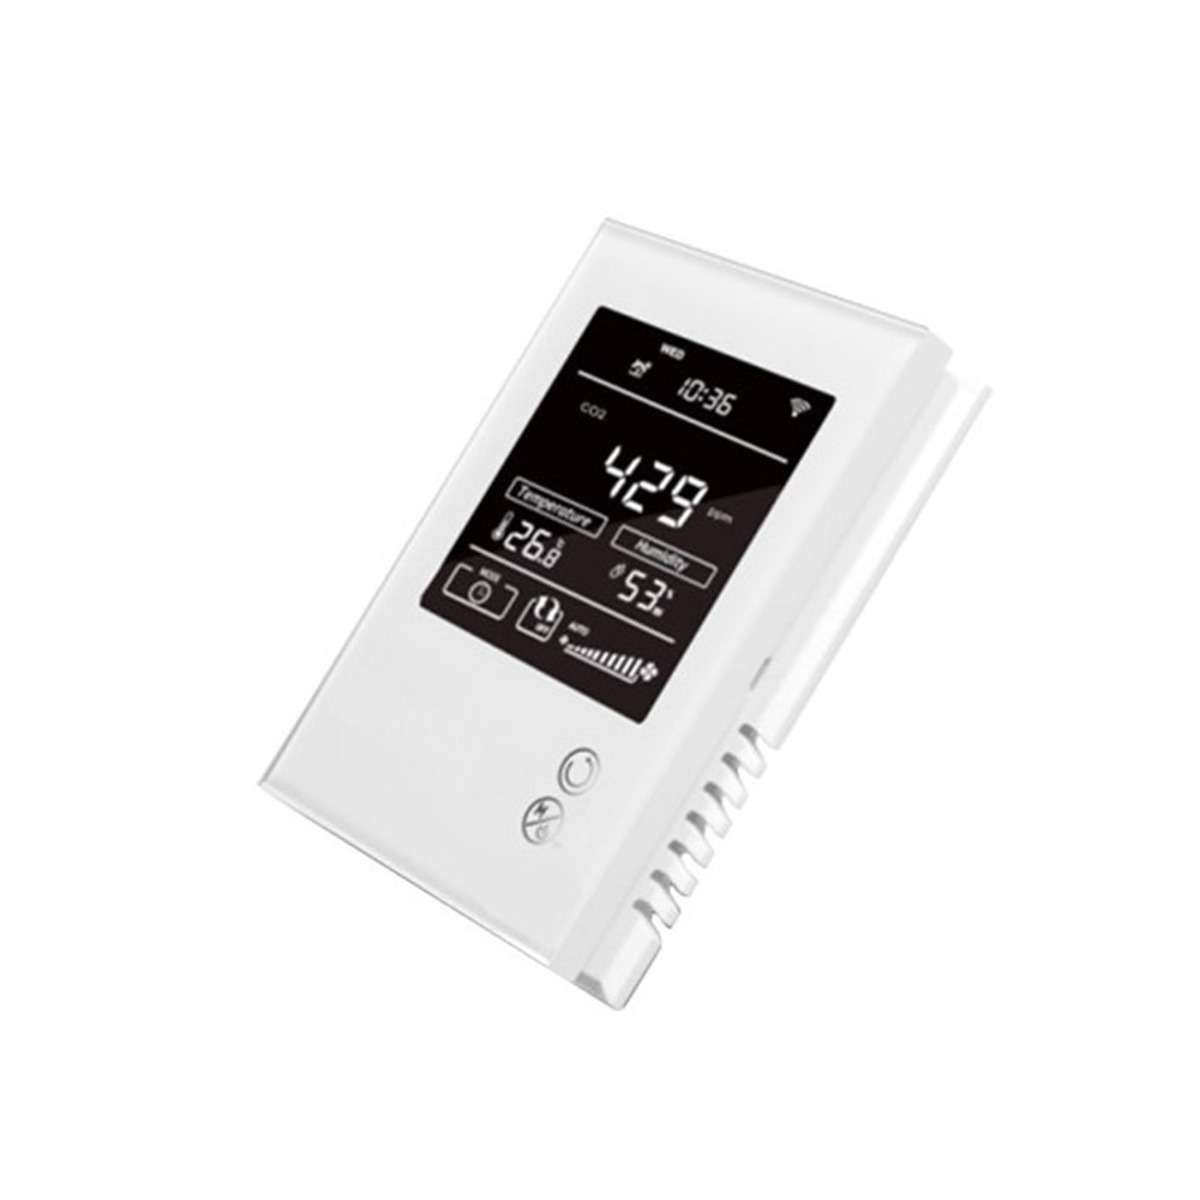 MCO HOME CO2-, Temperatur- MCOEMH9-CO2 Weiß MCO Feuchtigkeitssensor Sensor 12VDC- HOME - und